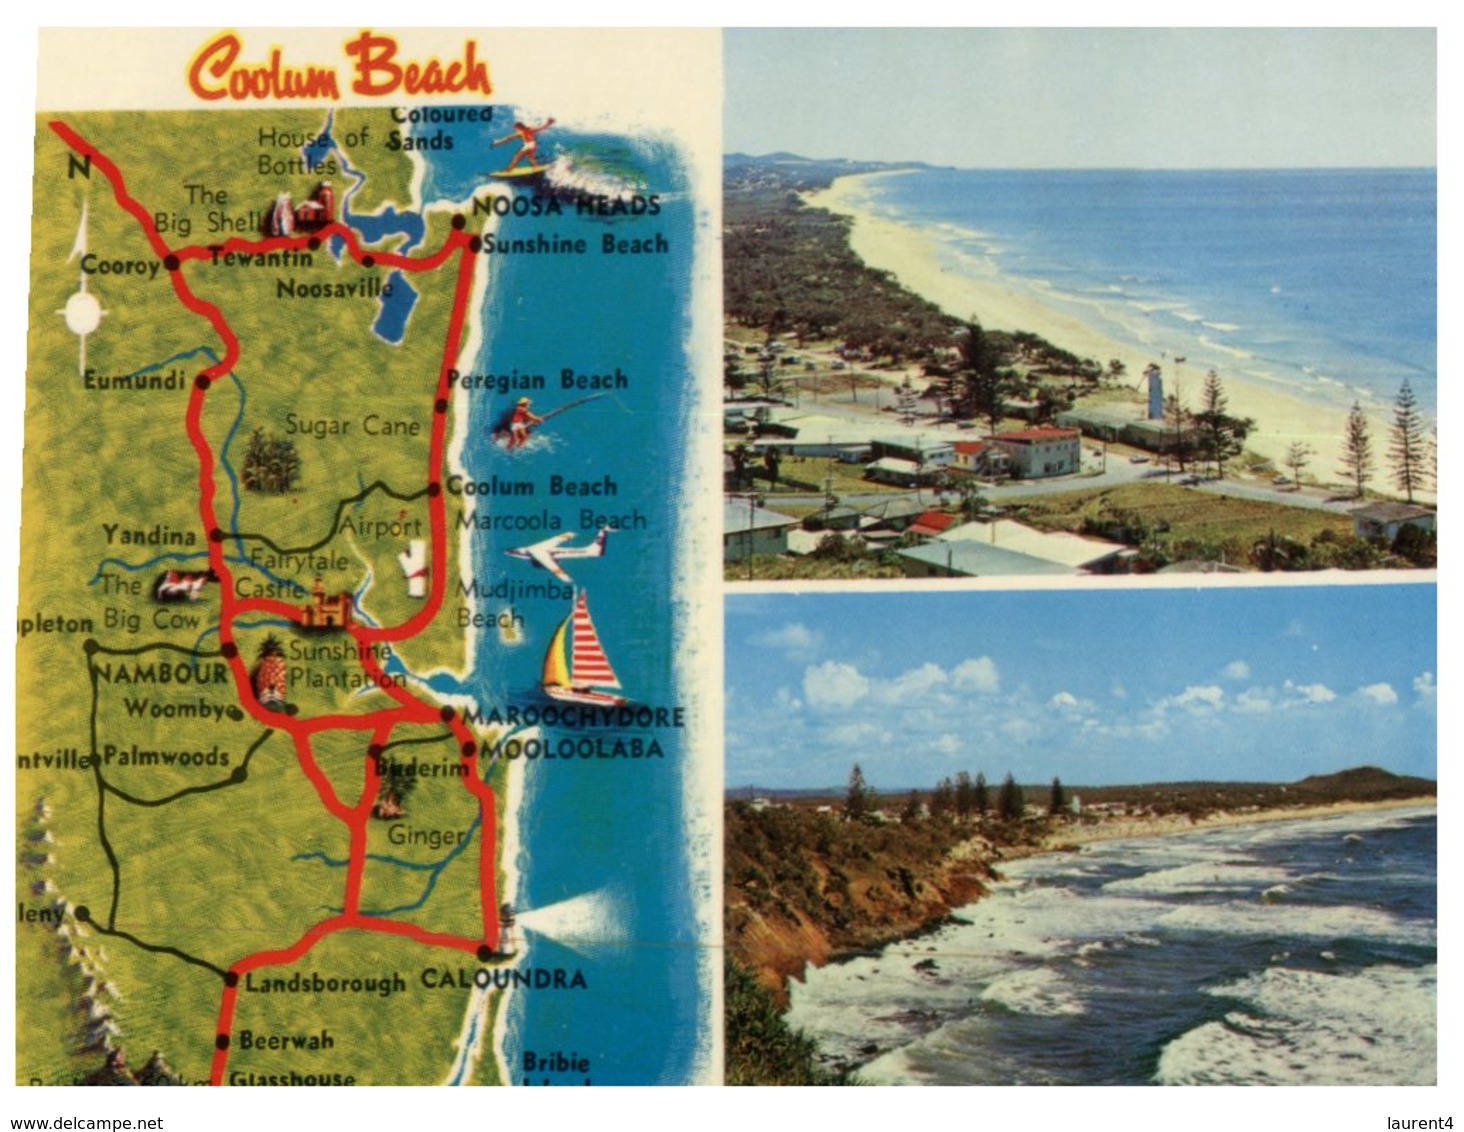 (222)  Australia - QLD - Coolum Beach (with Map) - Sunshine Coast